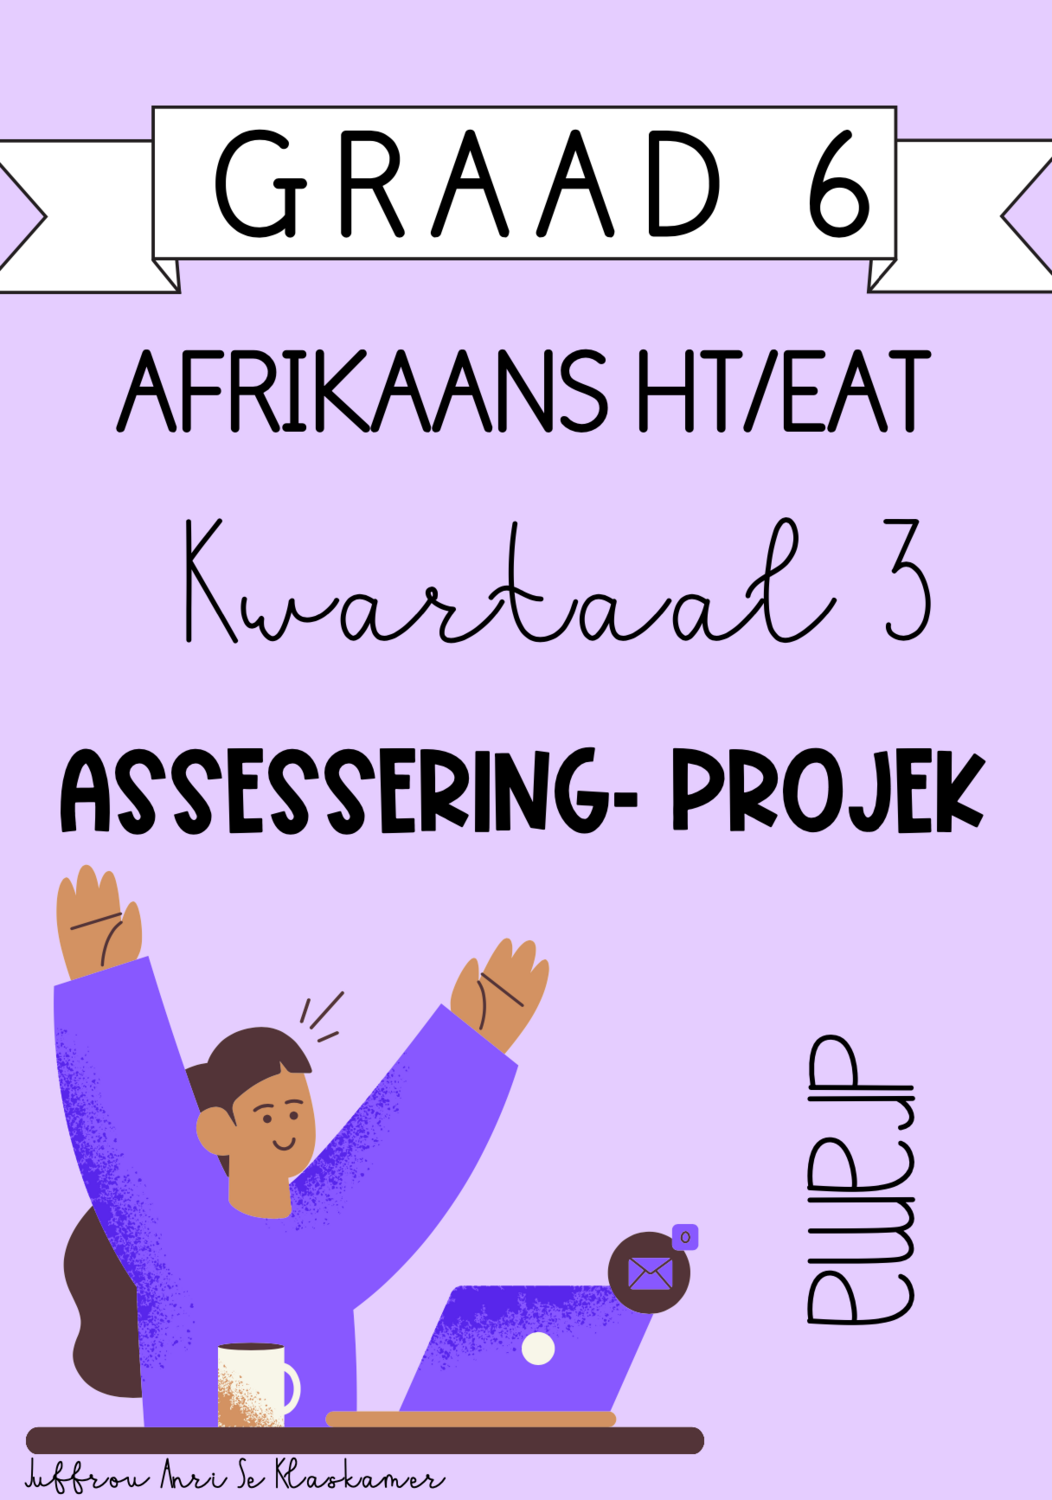 Graad 6 Afrikaans HT / EAT kwartaal 3 projek (2023)